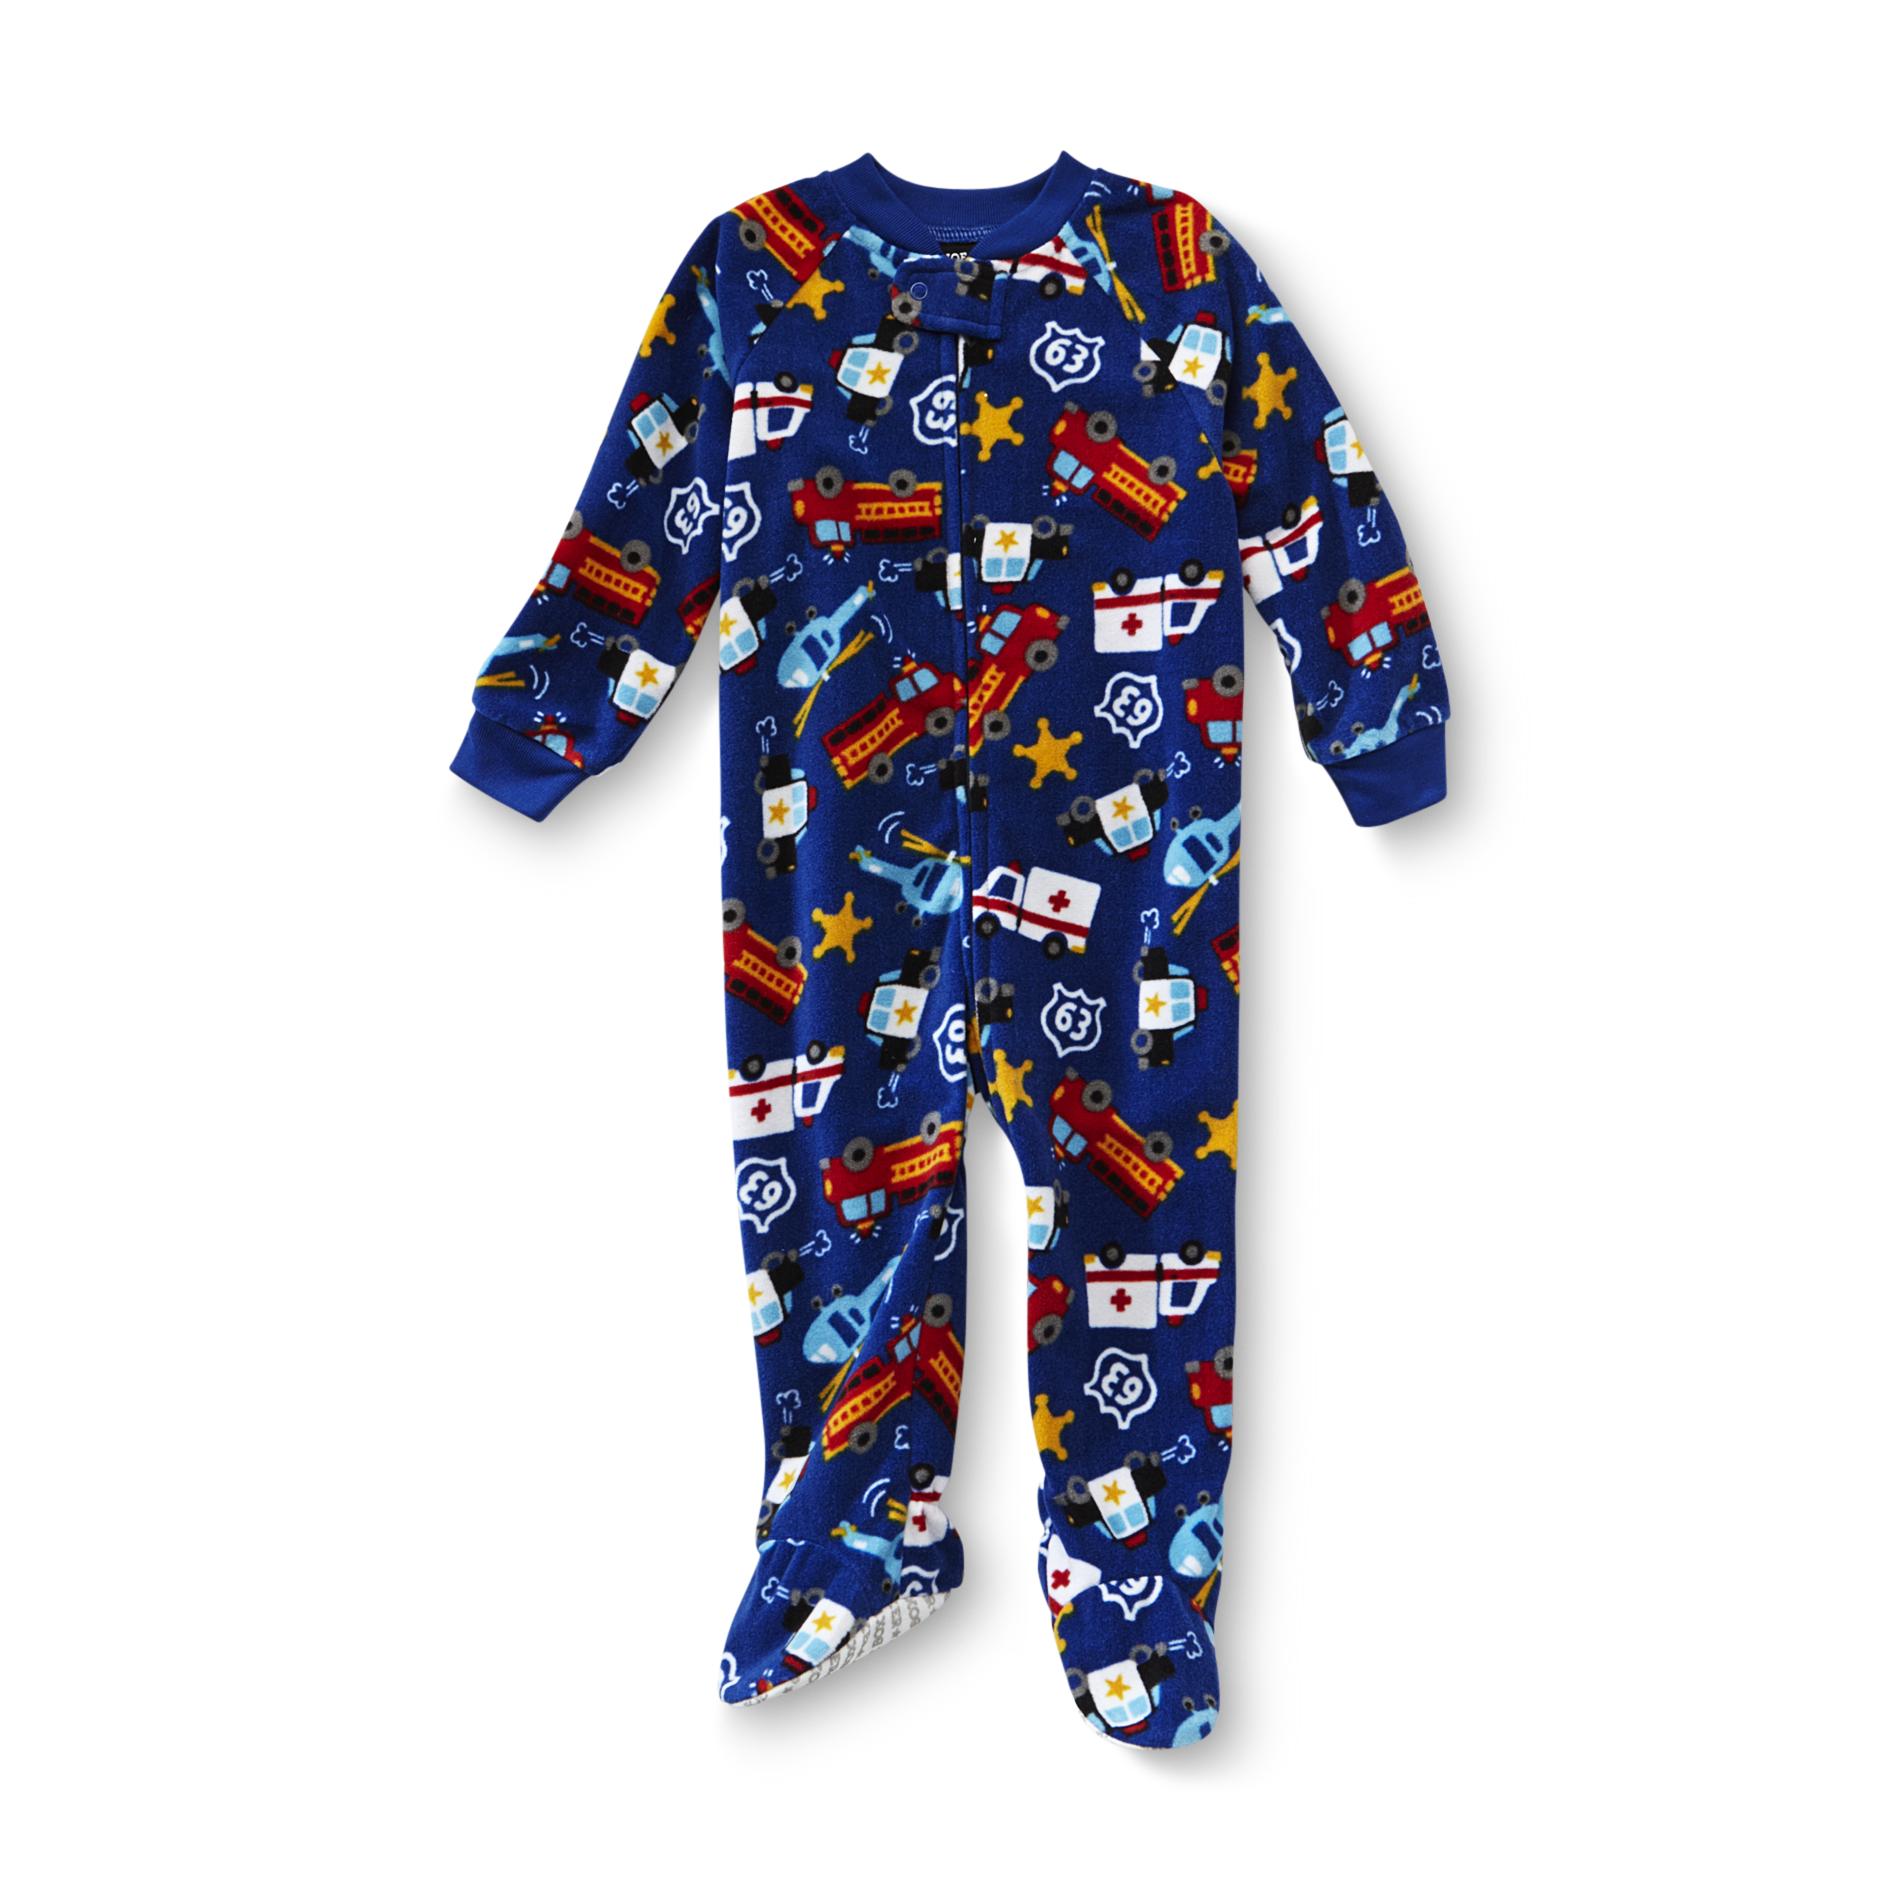 Joe Boxer Infant & Toddler Boy's Footed Sleeper Pajamas - Speedy Things